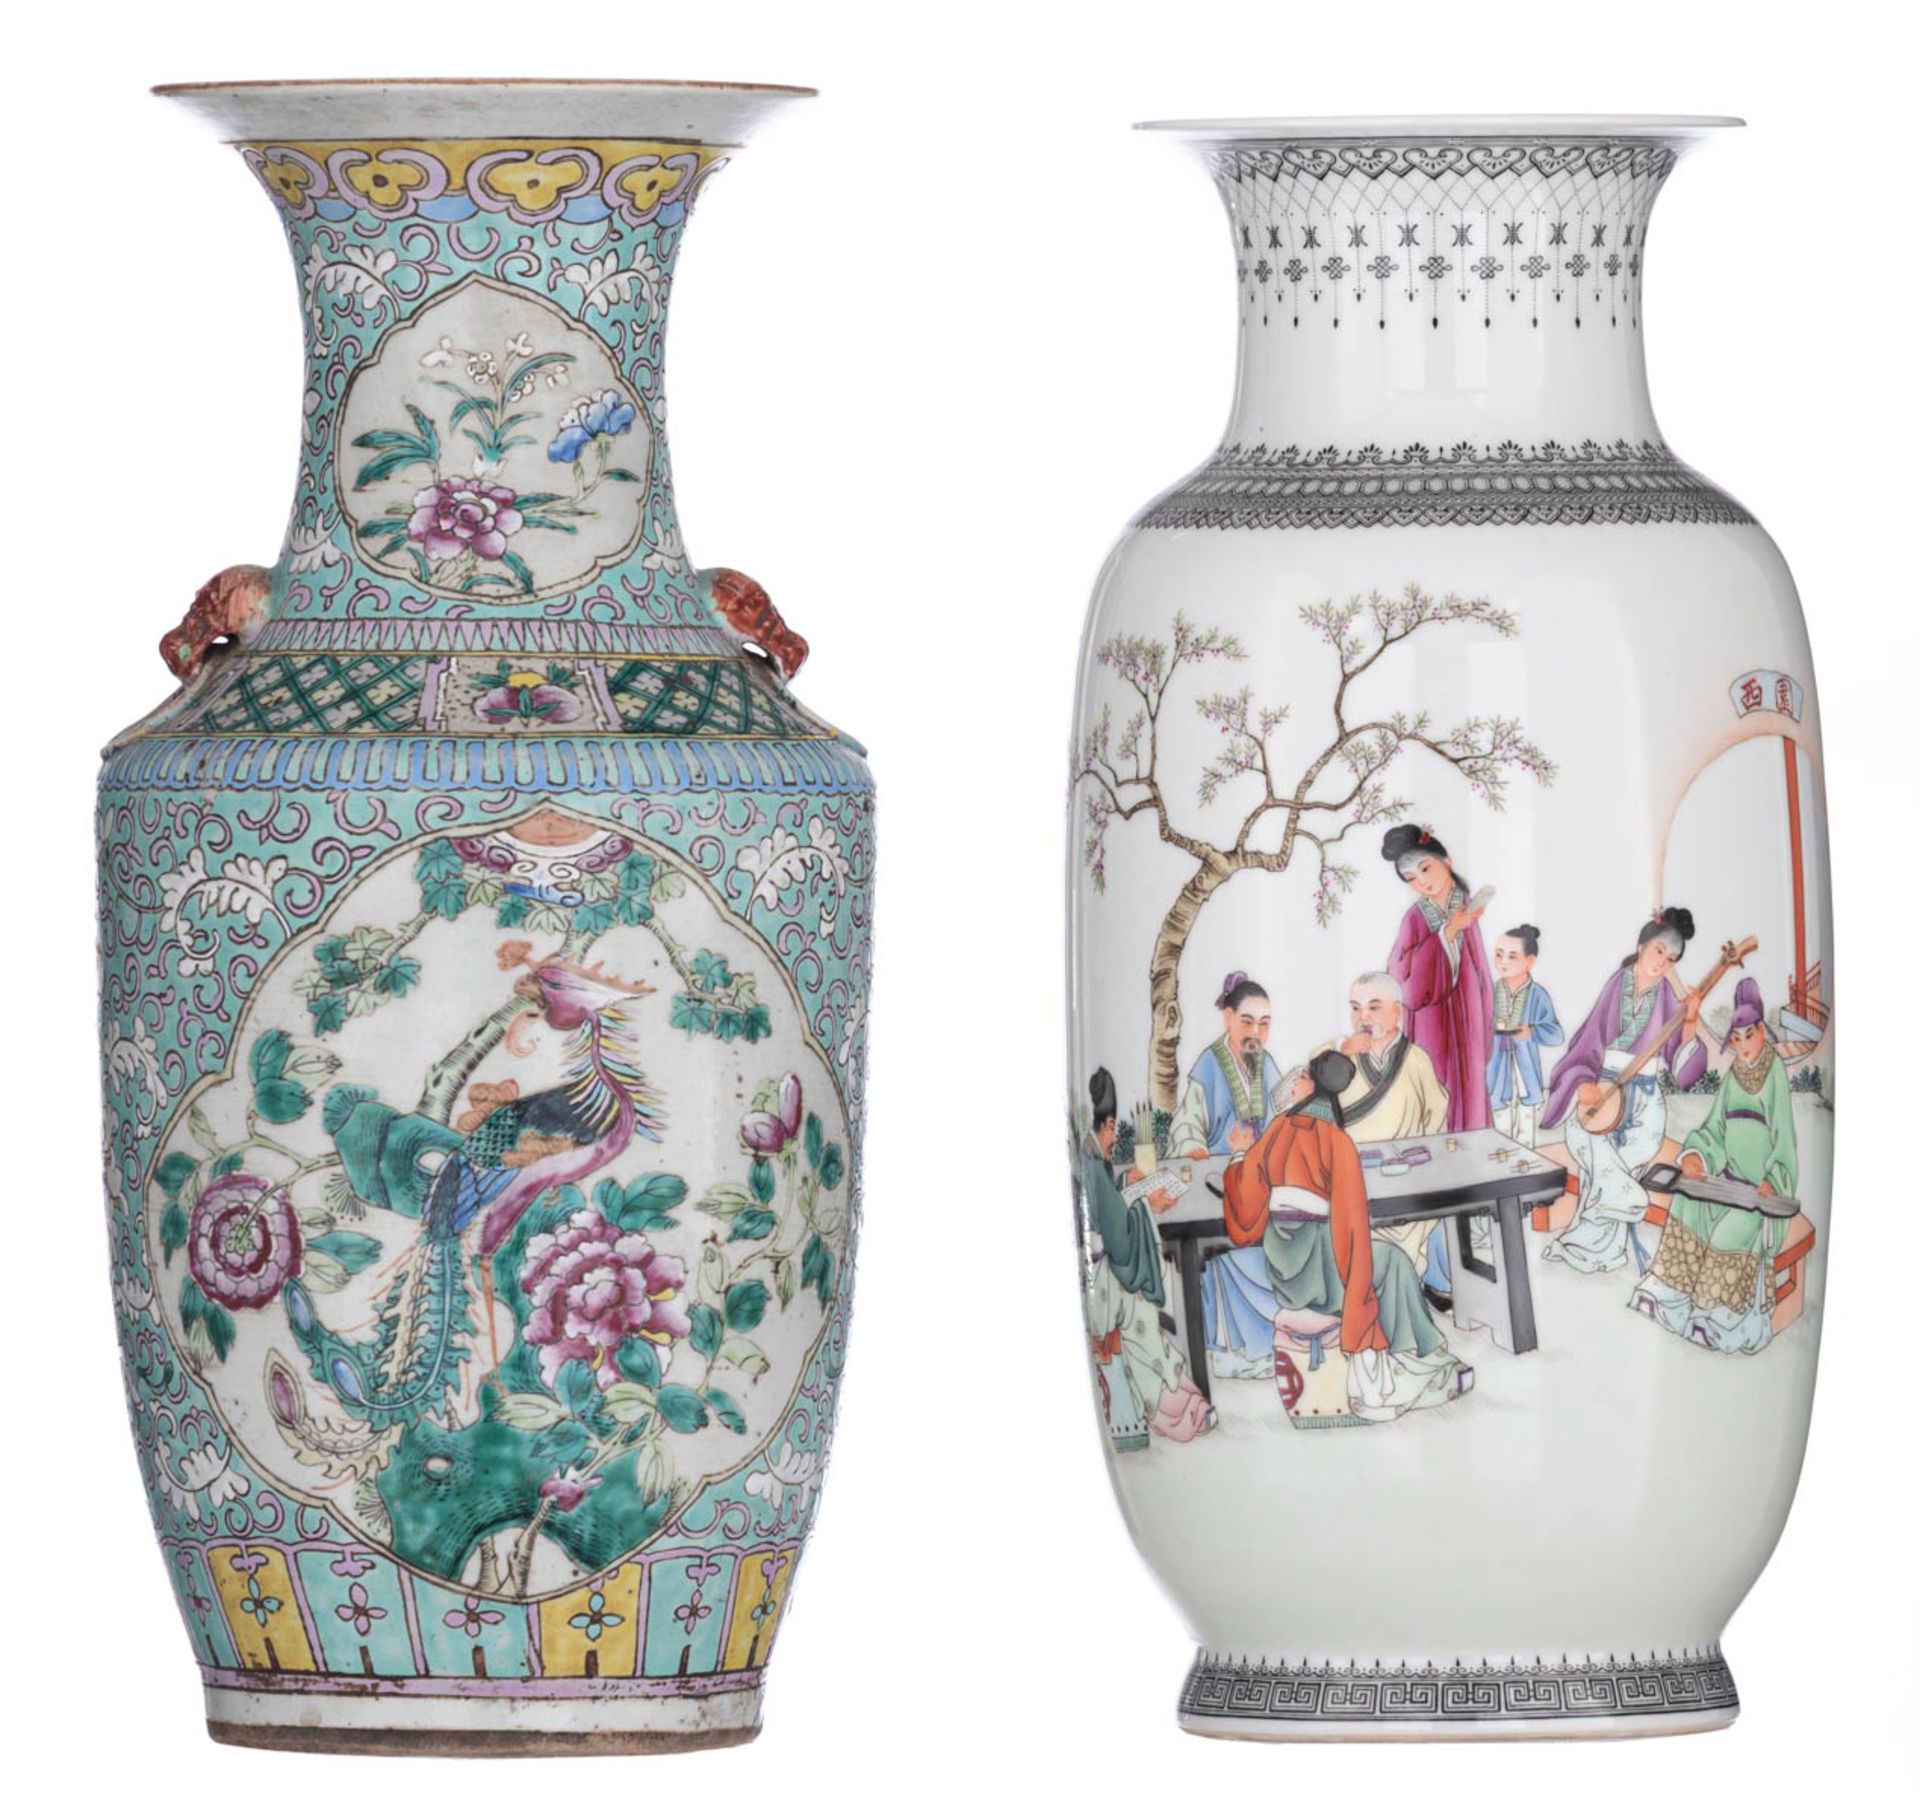 A Chinese Republic period polychrome vase